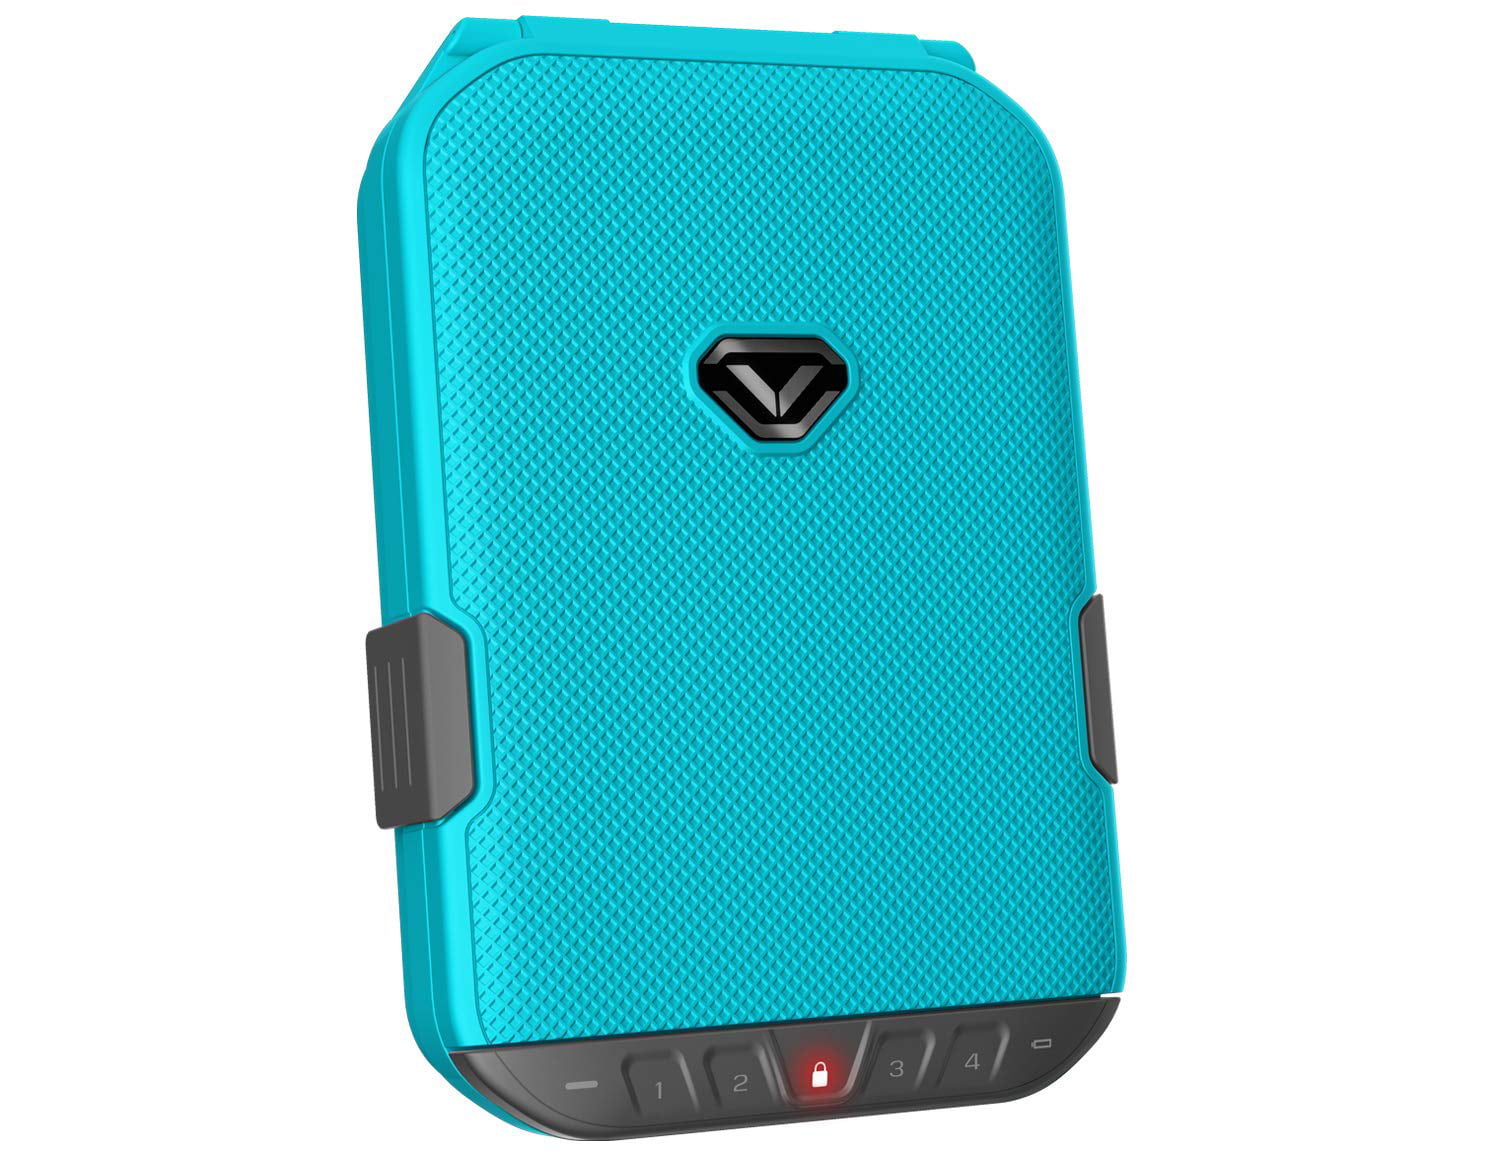 Vaultek LifePod Secure Waterproof Travel Case Rugged Electronic Lock Box Travel Organizer Portable Handgun Safe with Backlit Keypad 